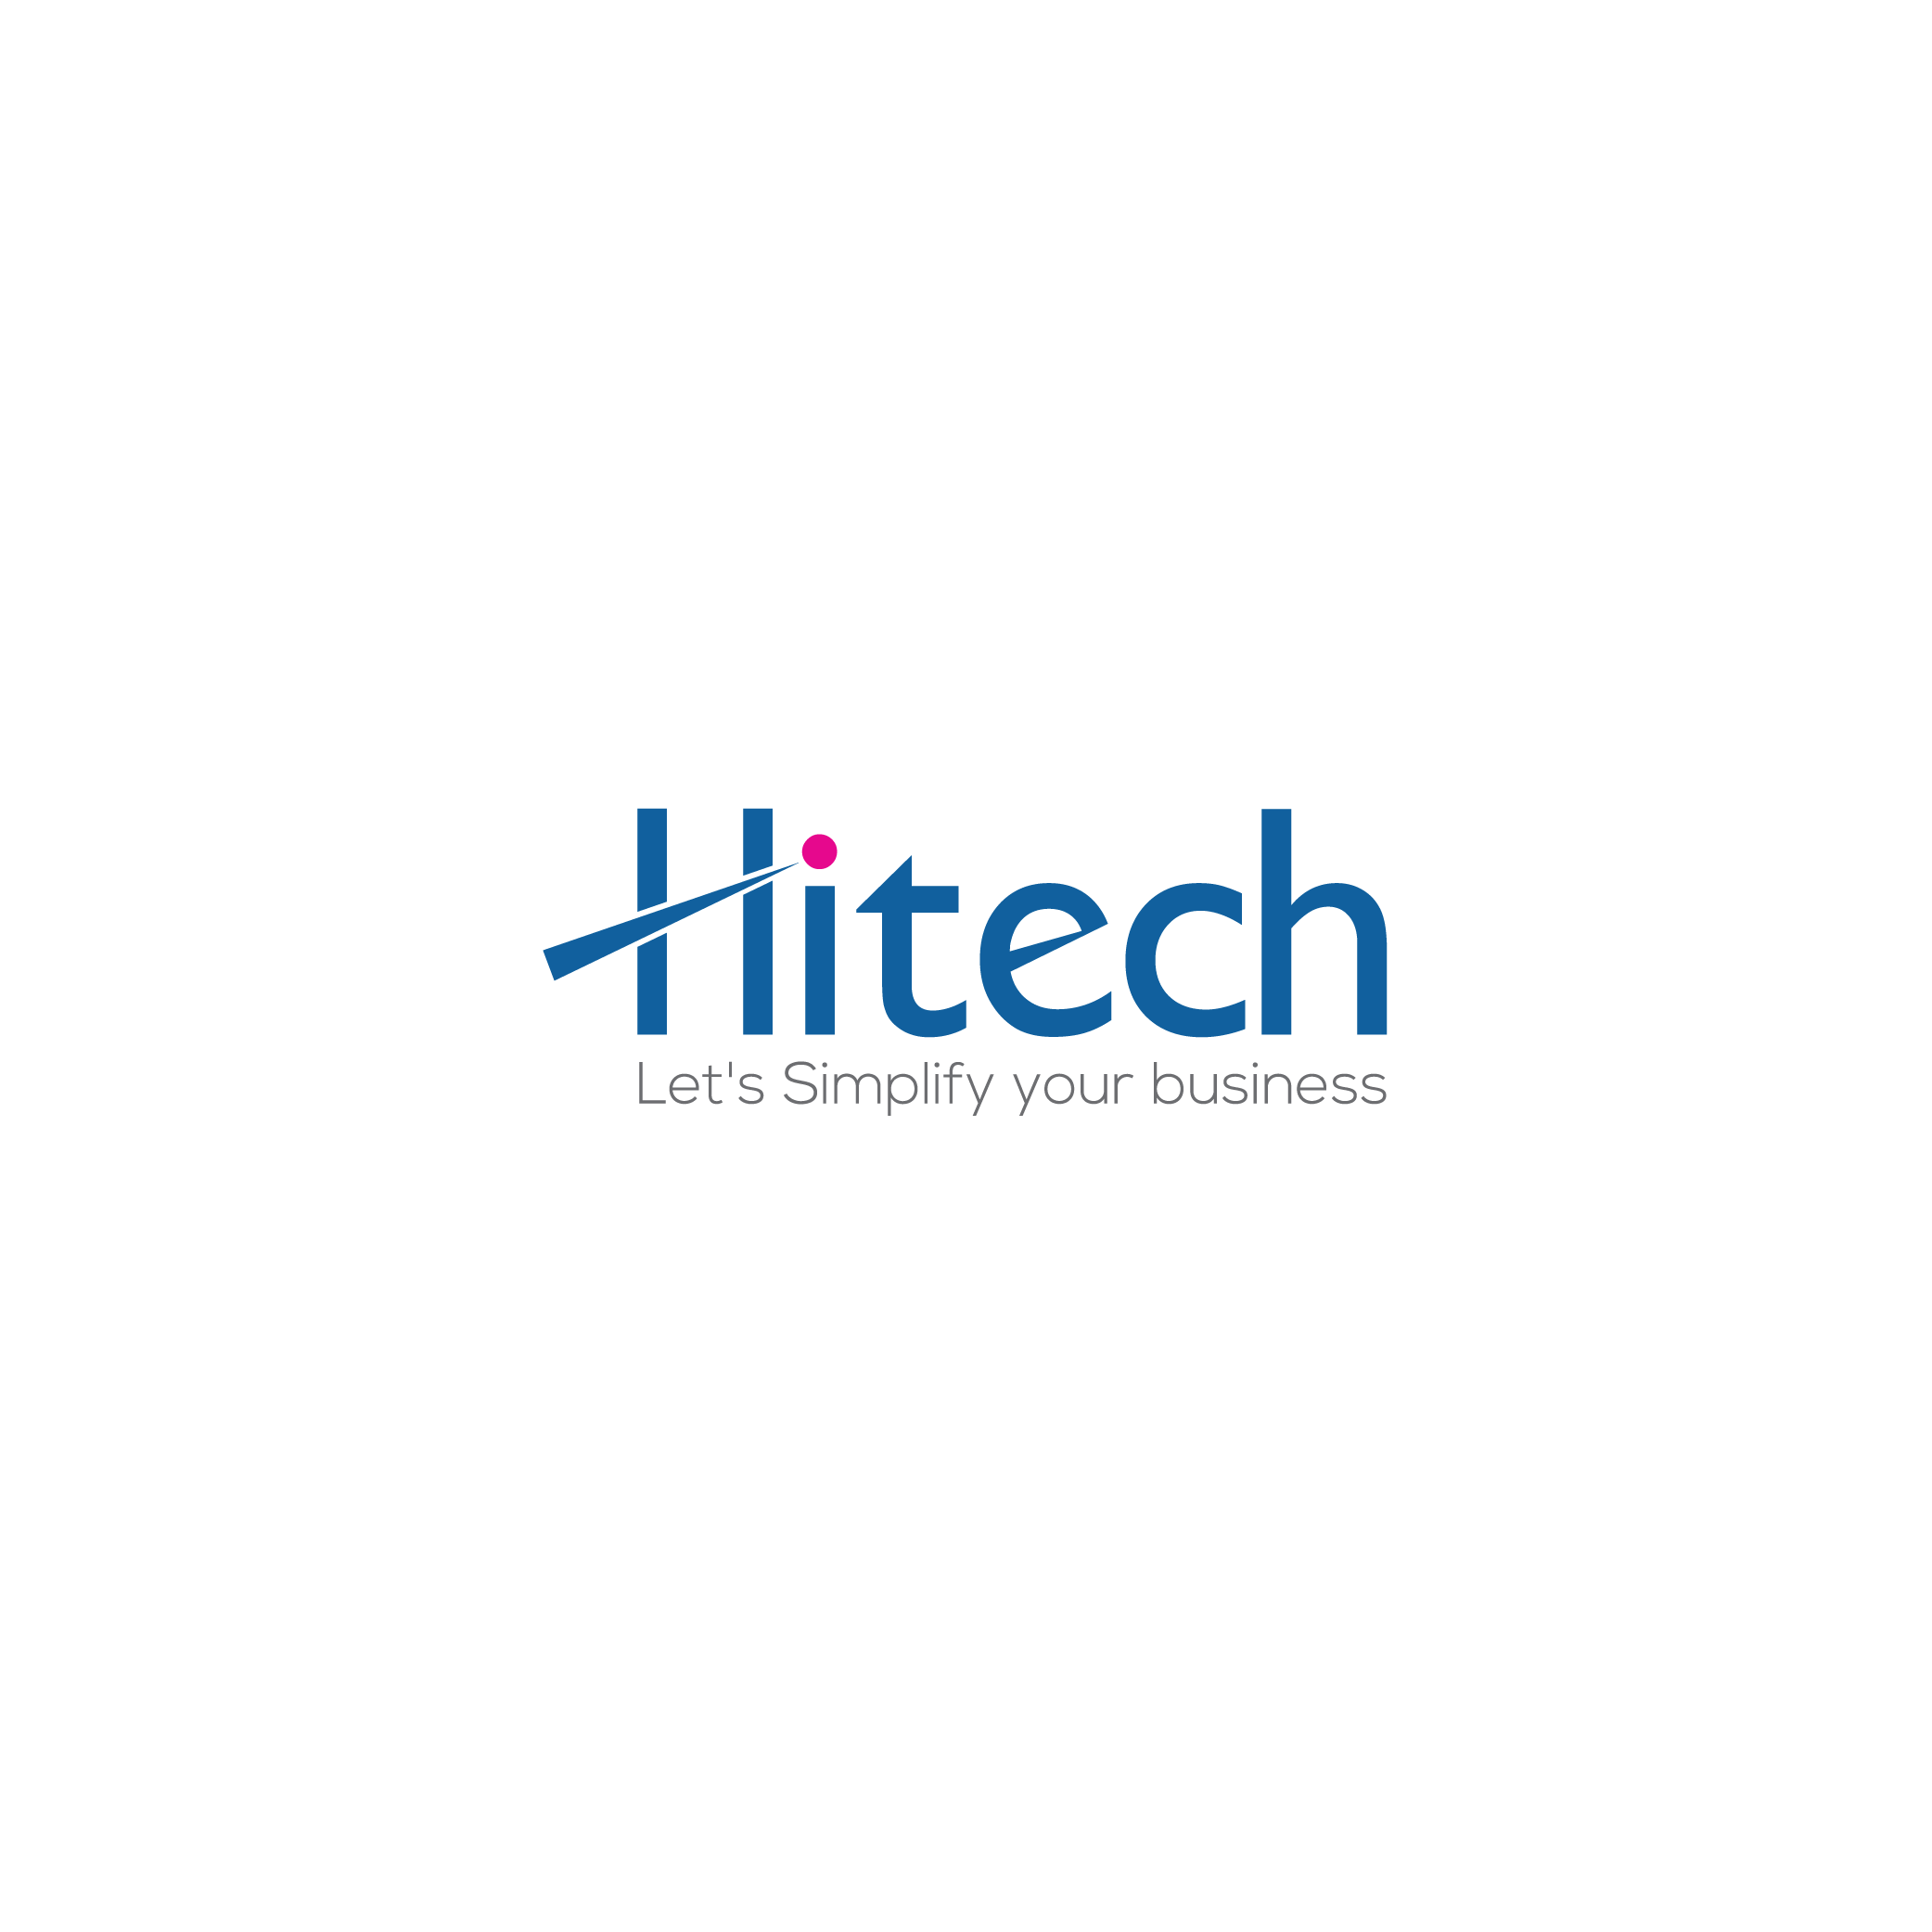 Hitech Digital World Pvt Ltd in Elioplus